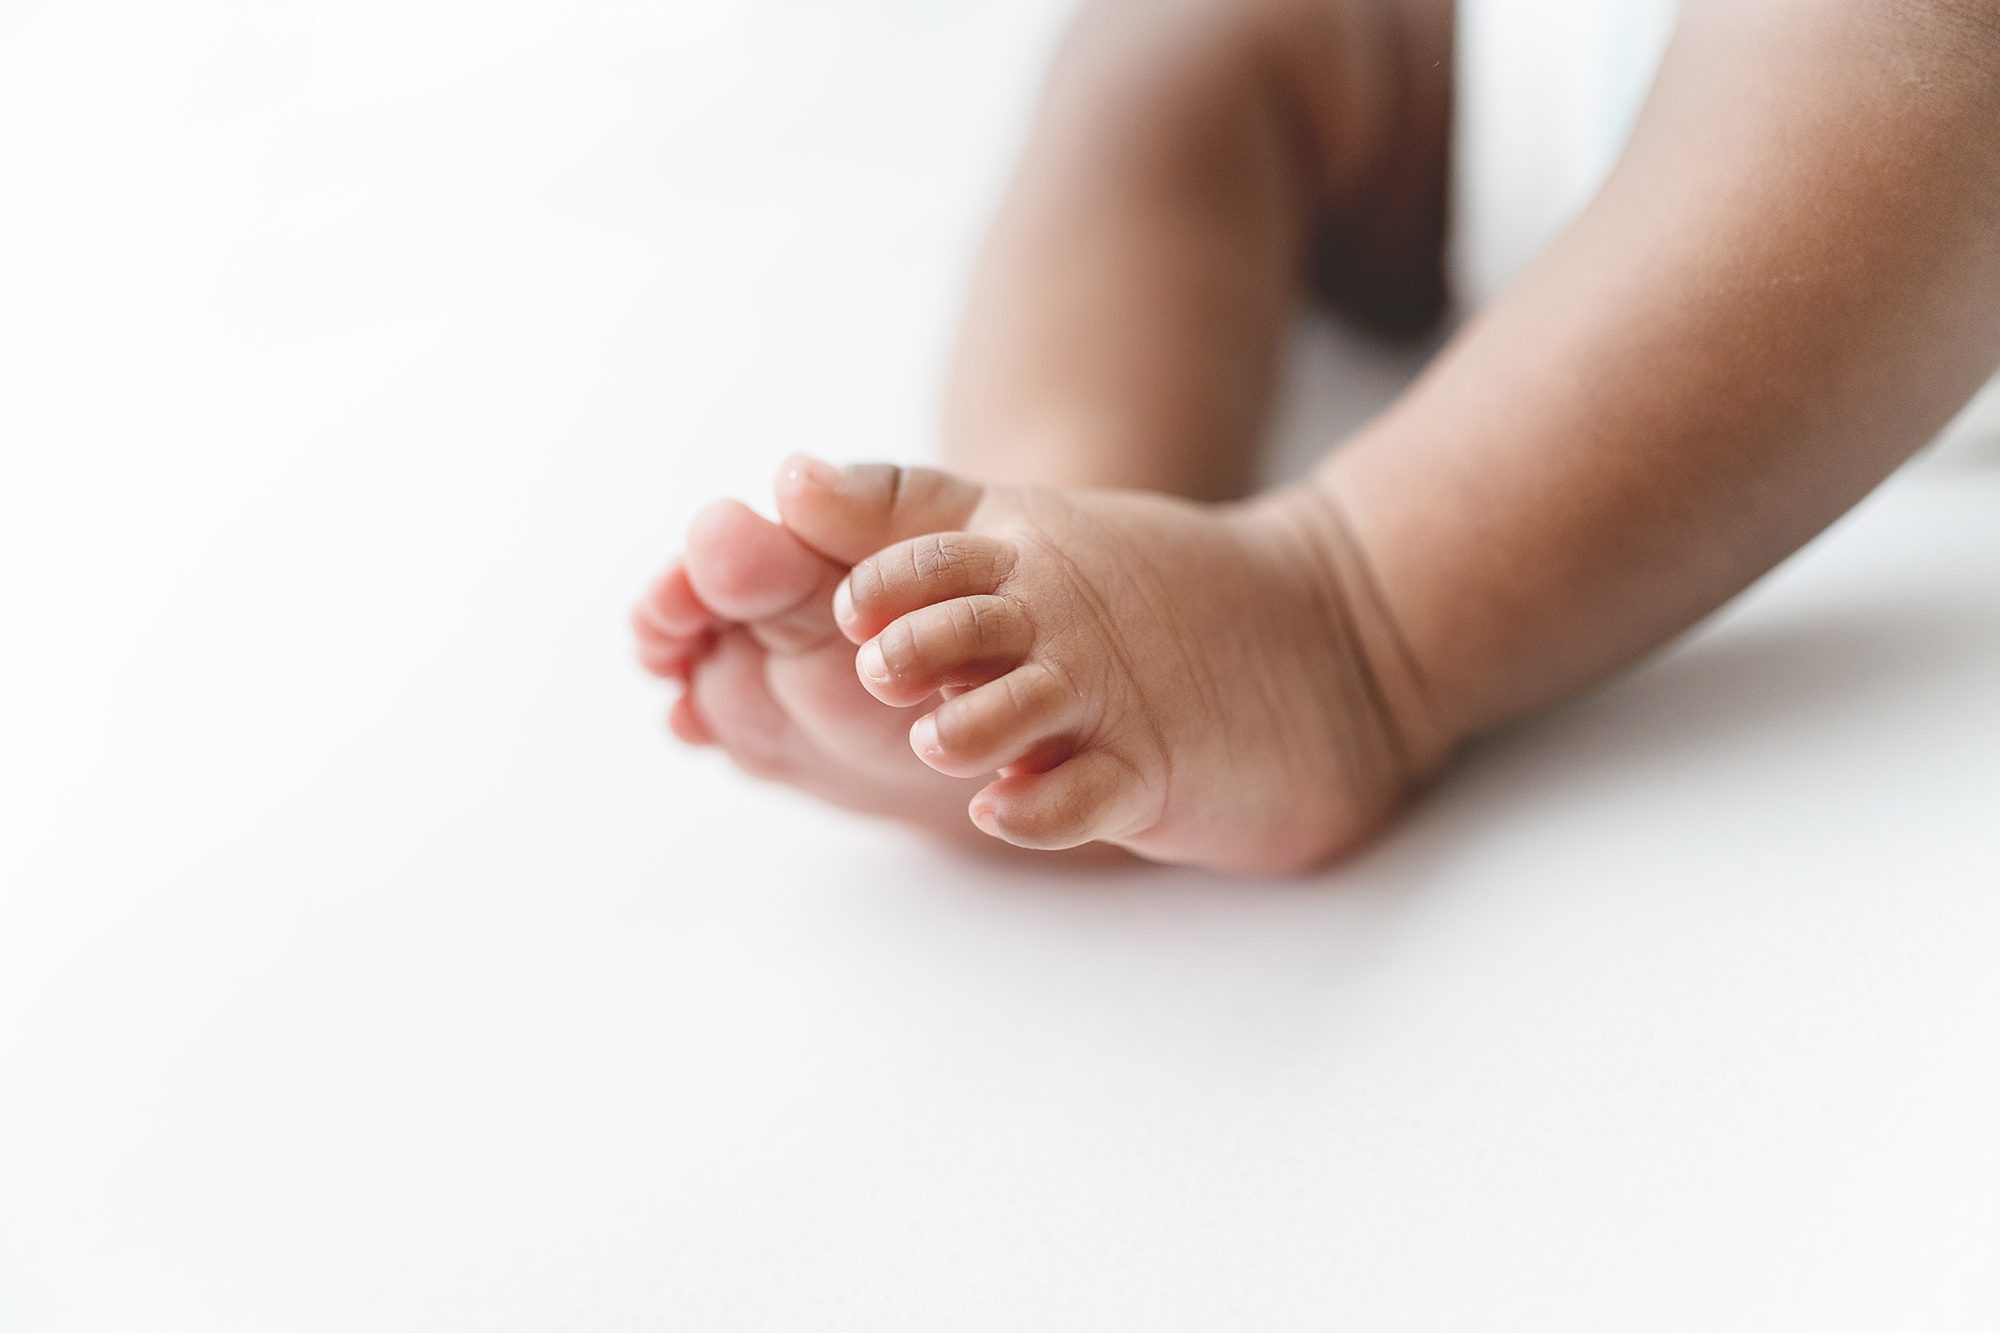 Reaj Roberts Photography Scottsdale newborn photographer baby toes